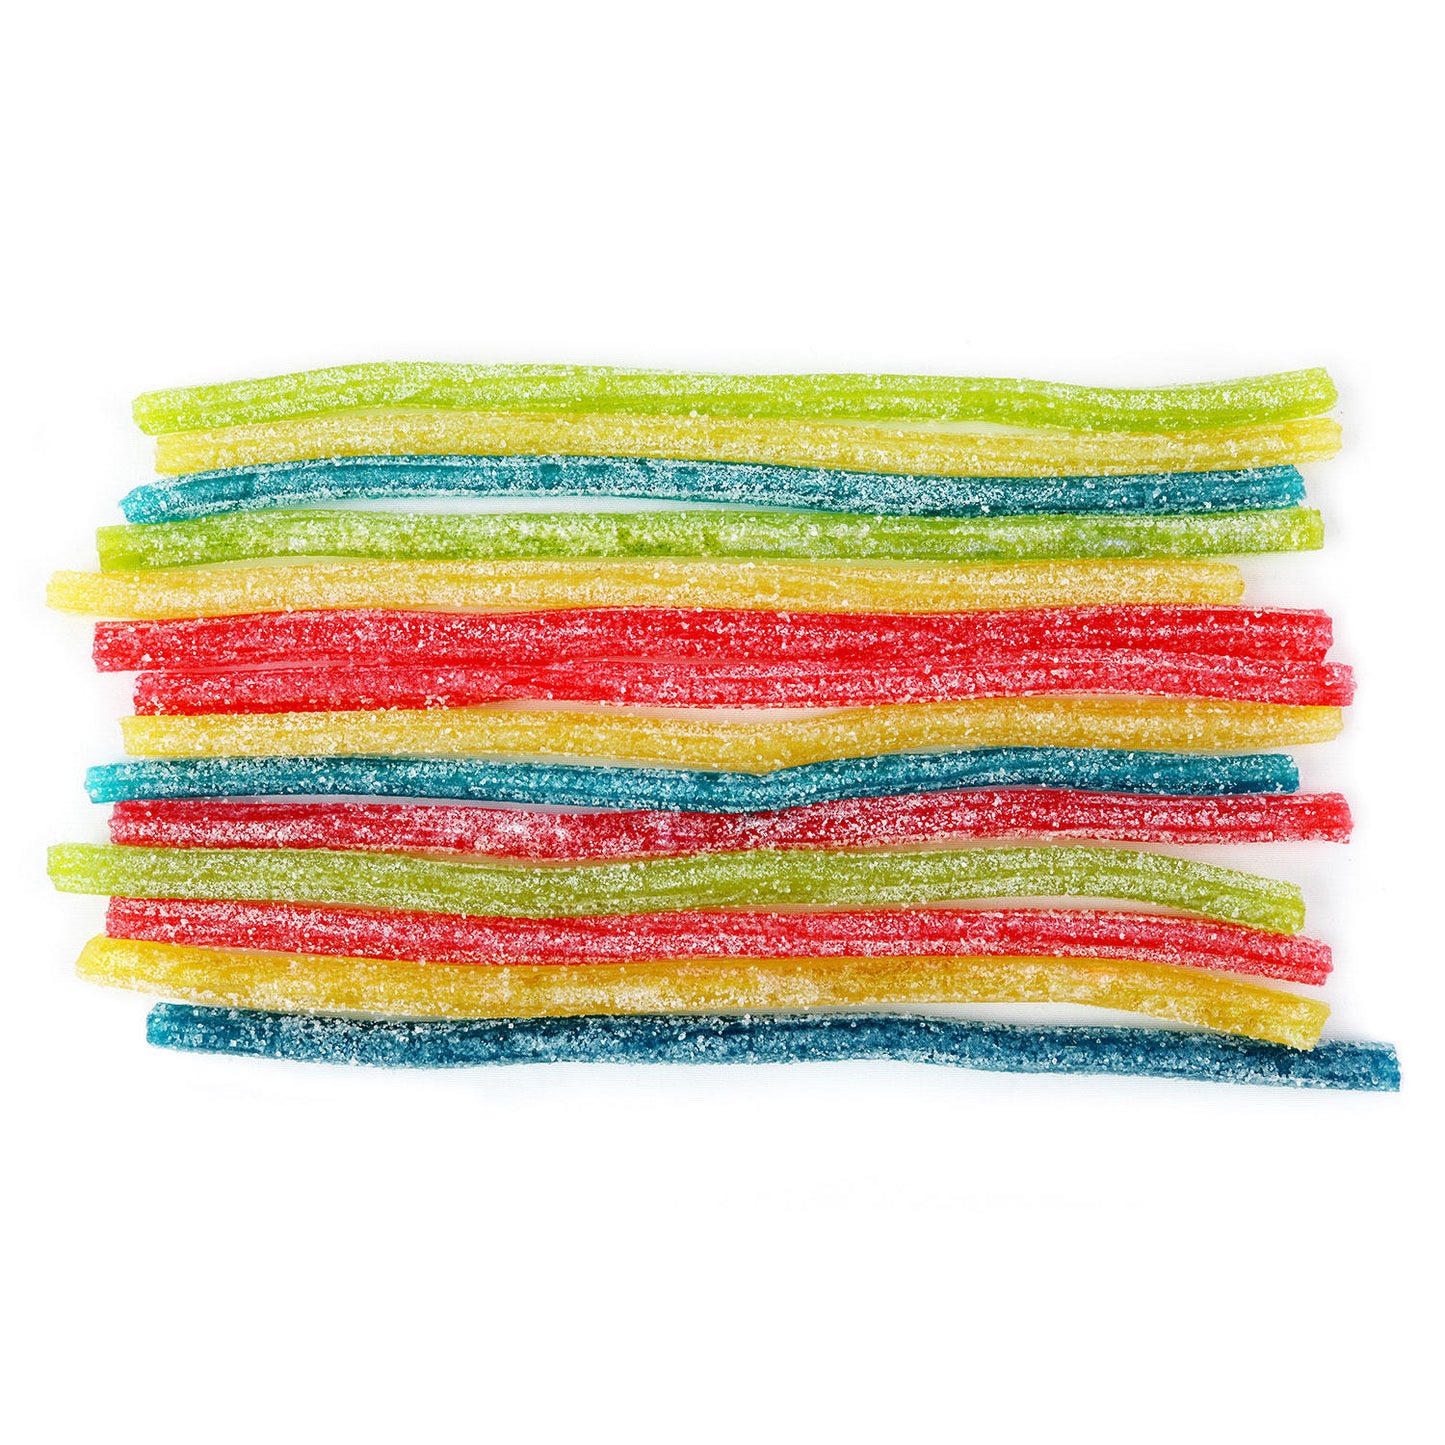 Sour Punch Rainbow Straws (2 oz., 24 ct)